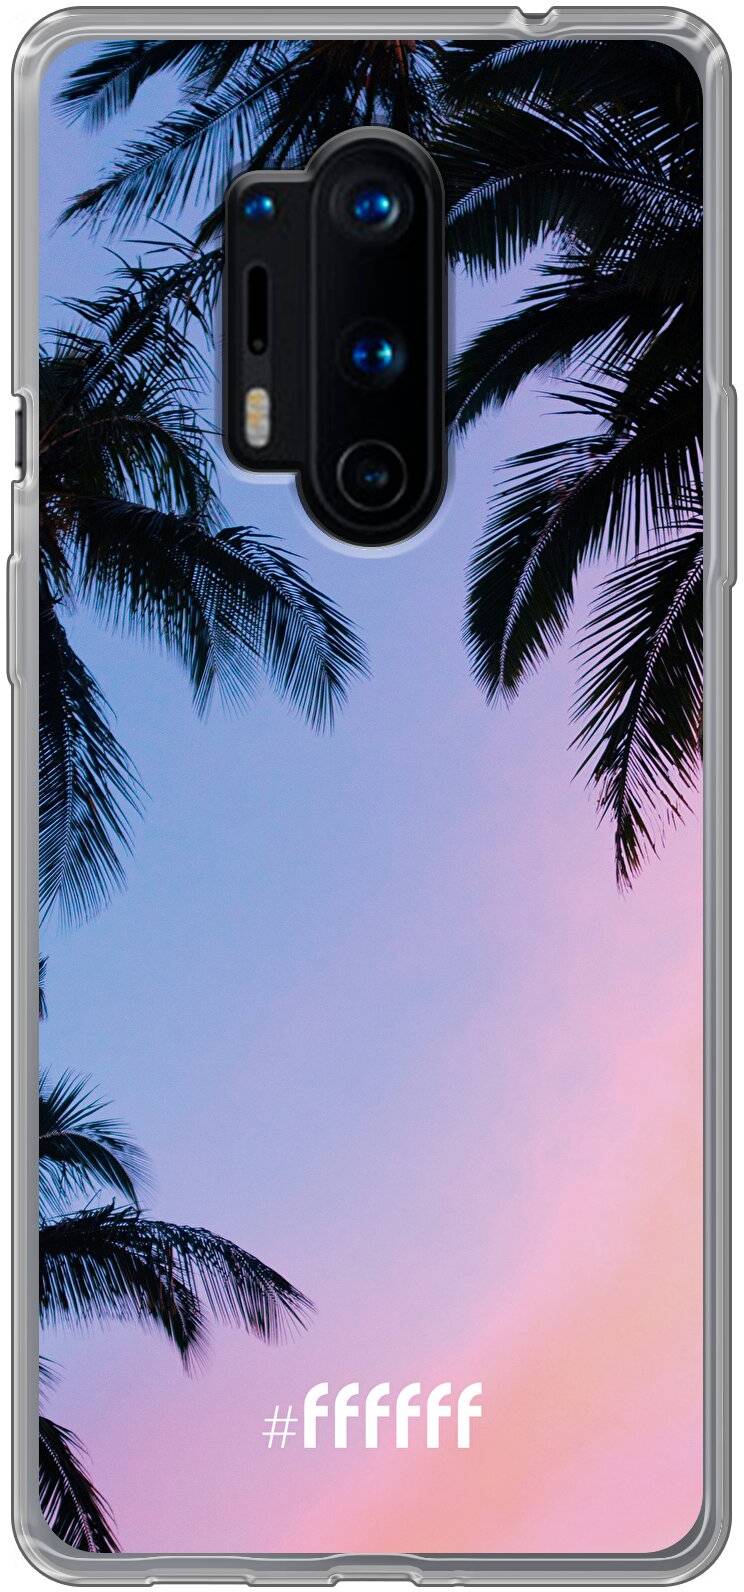 Sunset Palms 8 Pro